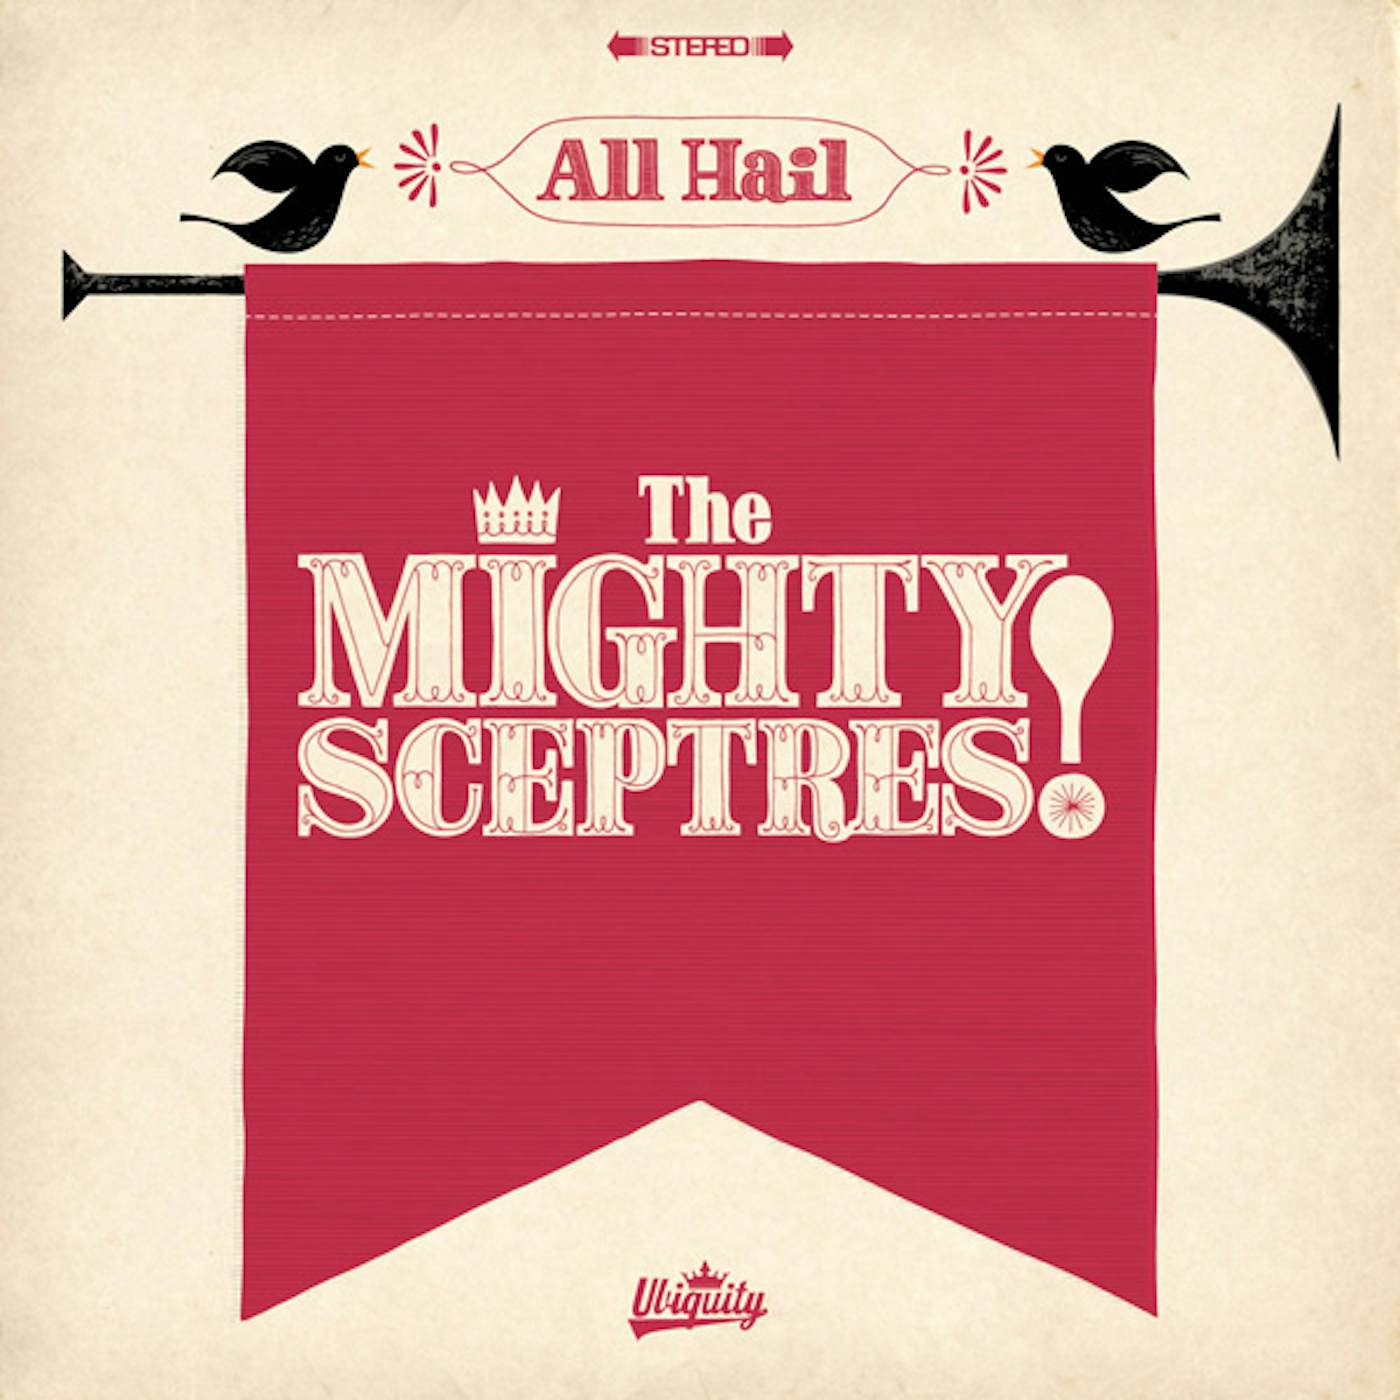 ALL HAIL THE MIGHTY SCEPTRES! (UK) (Vinyl)